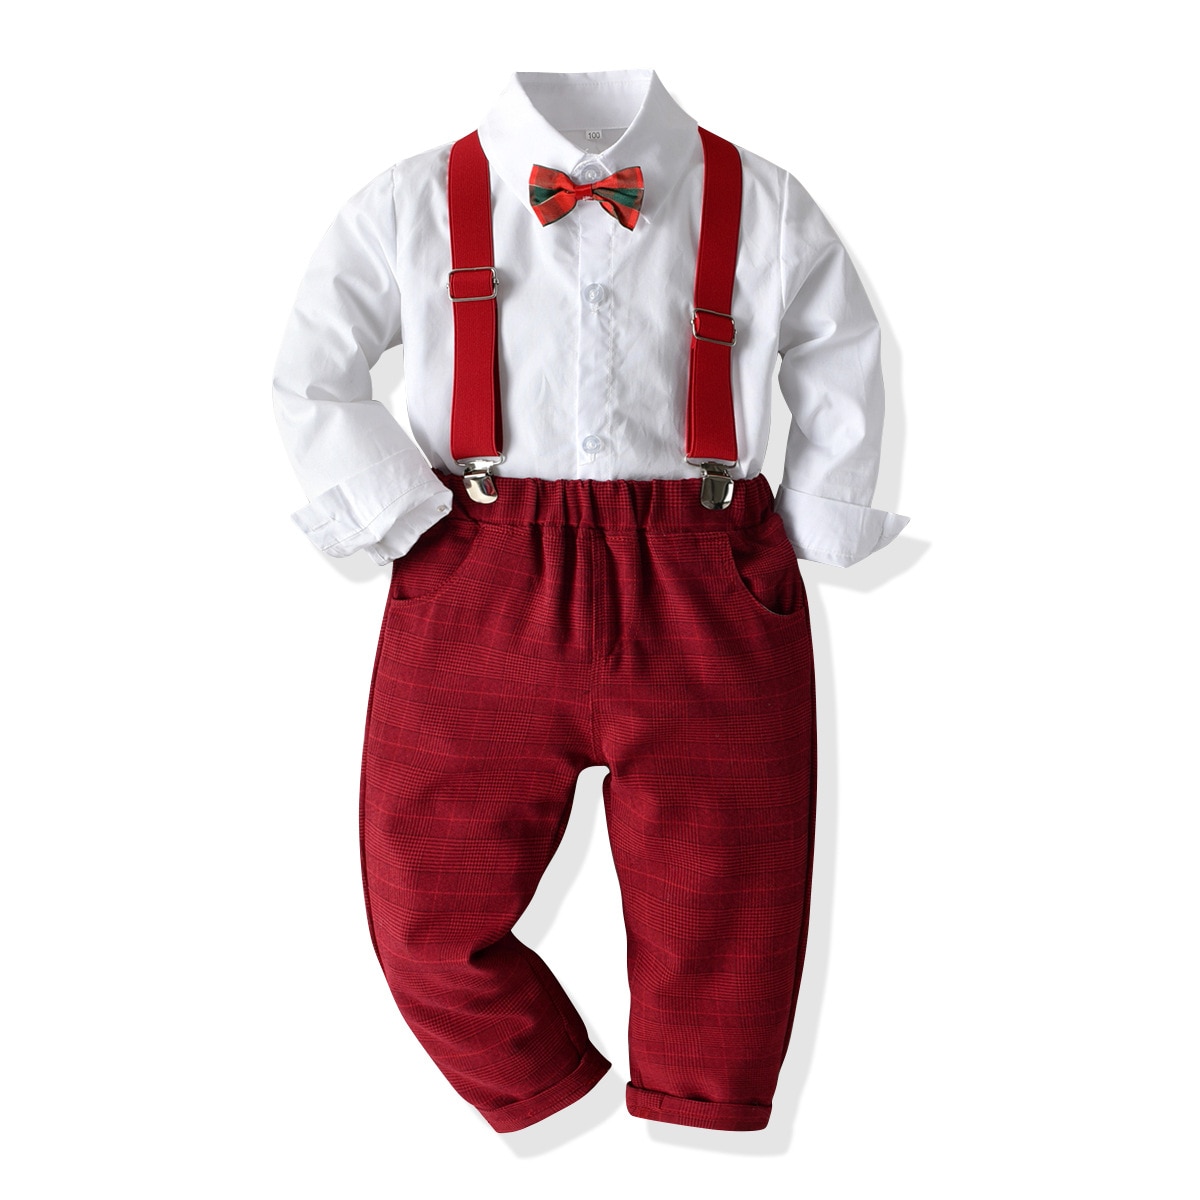 Autumn Winter Toddler Boys Clothing Set Children's Formal White Shirt Tops+Suspender +Pants 2PCS Suit Kids Christmas Outfits